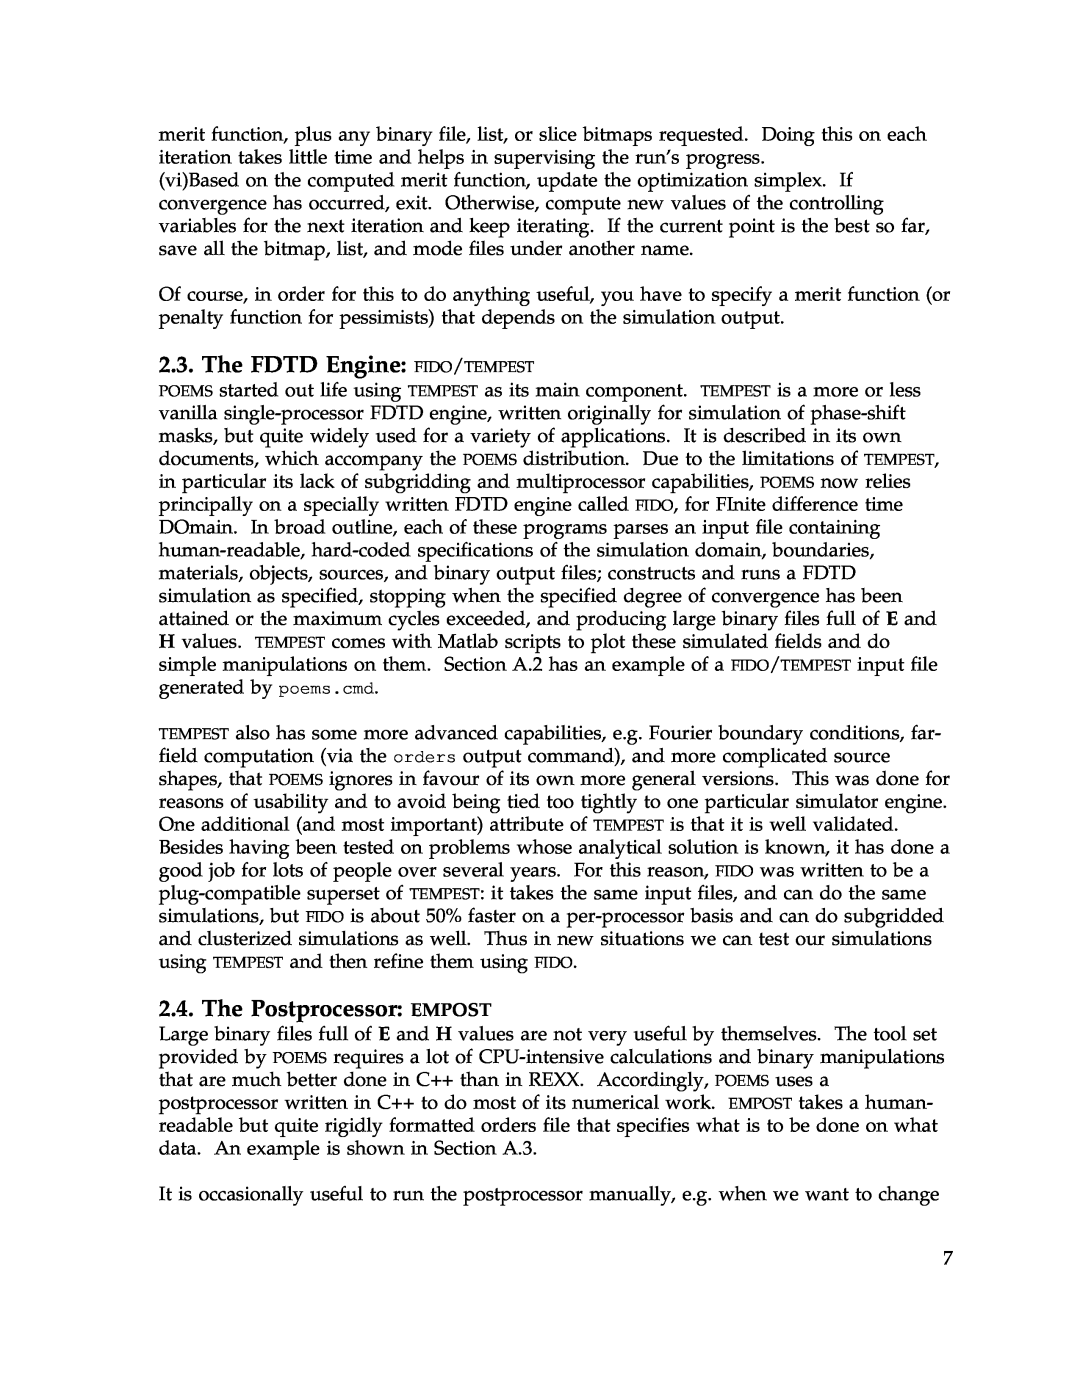 IBM Release 1.93 manual The FDTD Engine FIDO/TEMPEST, The Postprocessor EMPOST 